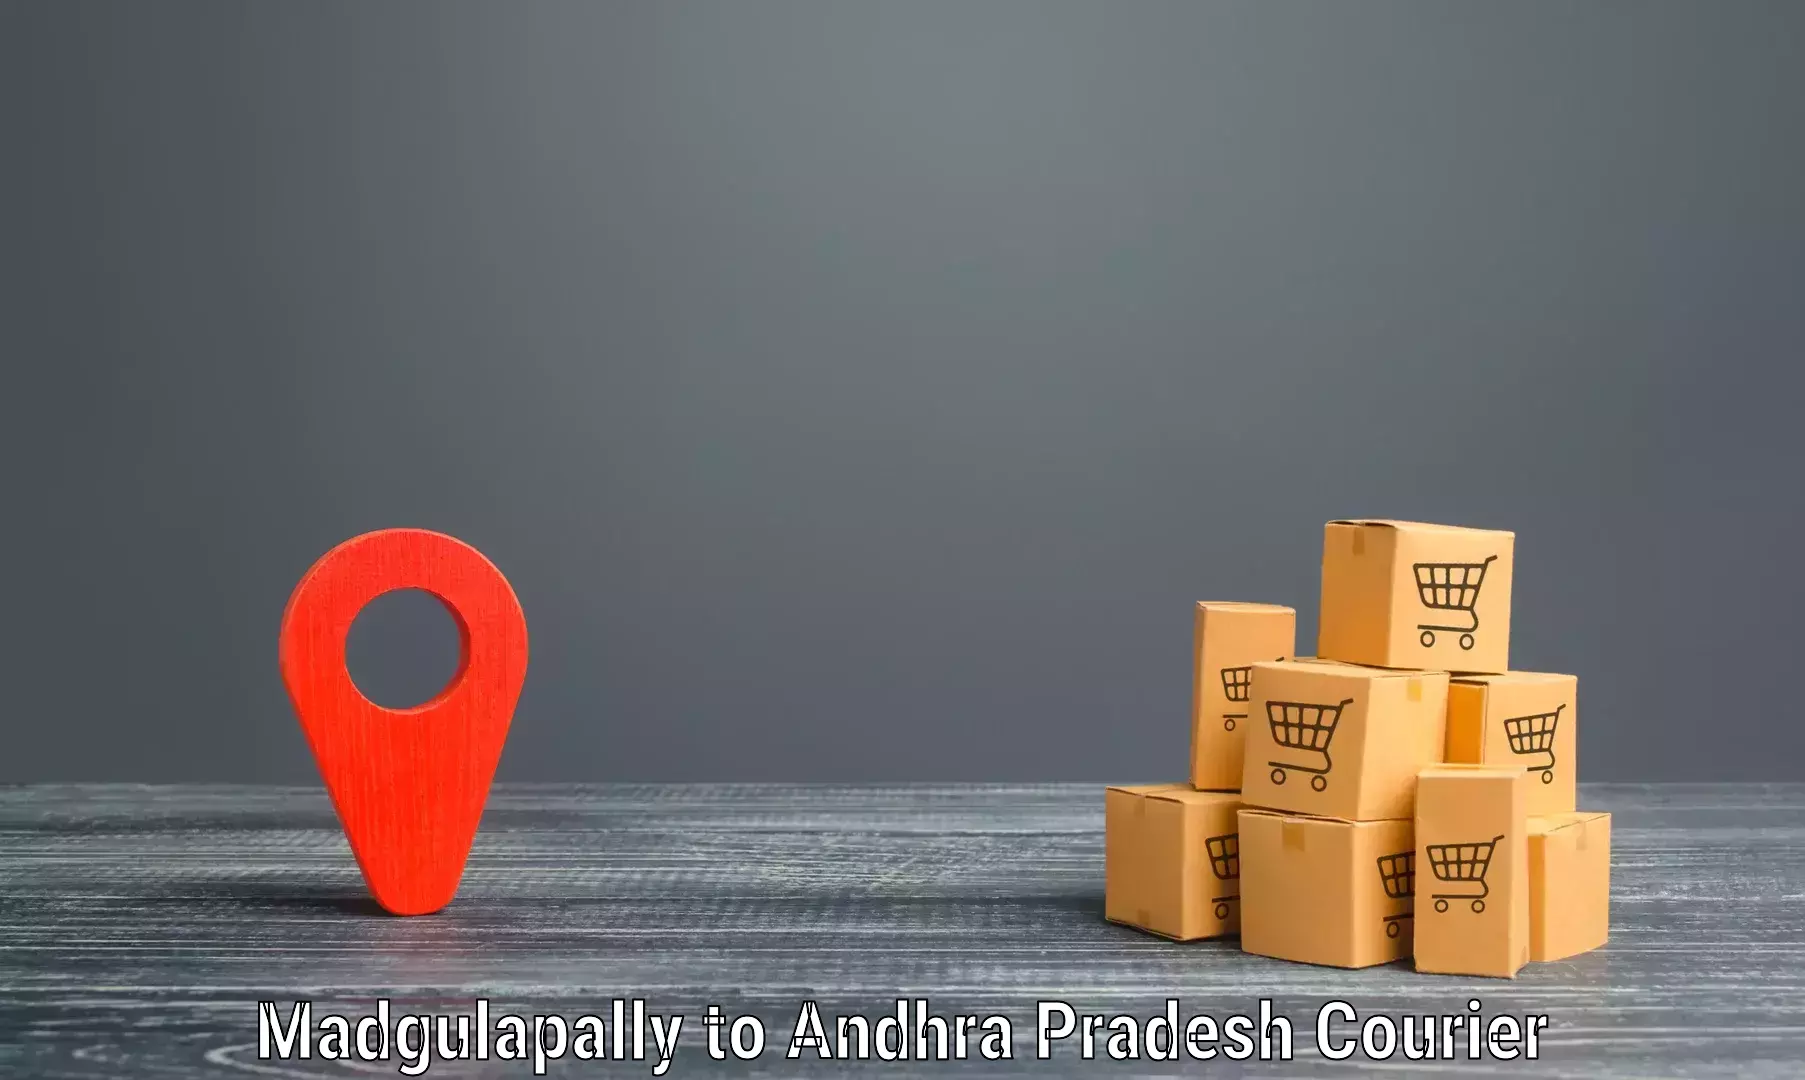 Advanced courier platforms Madgulapally to Challapalli